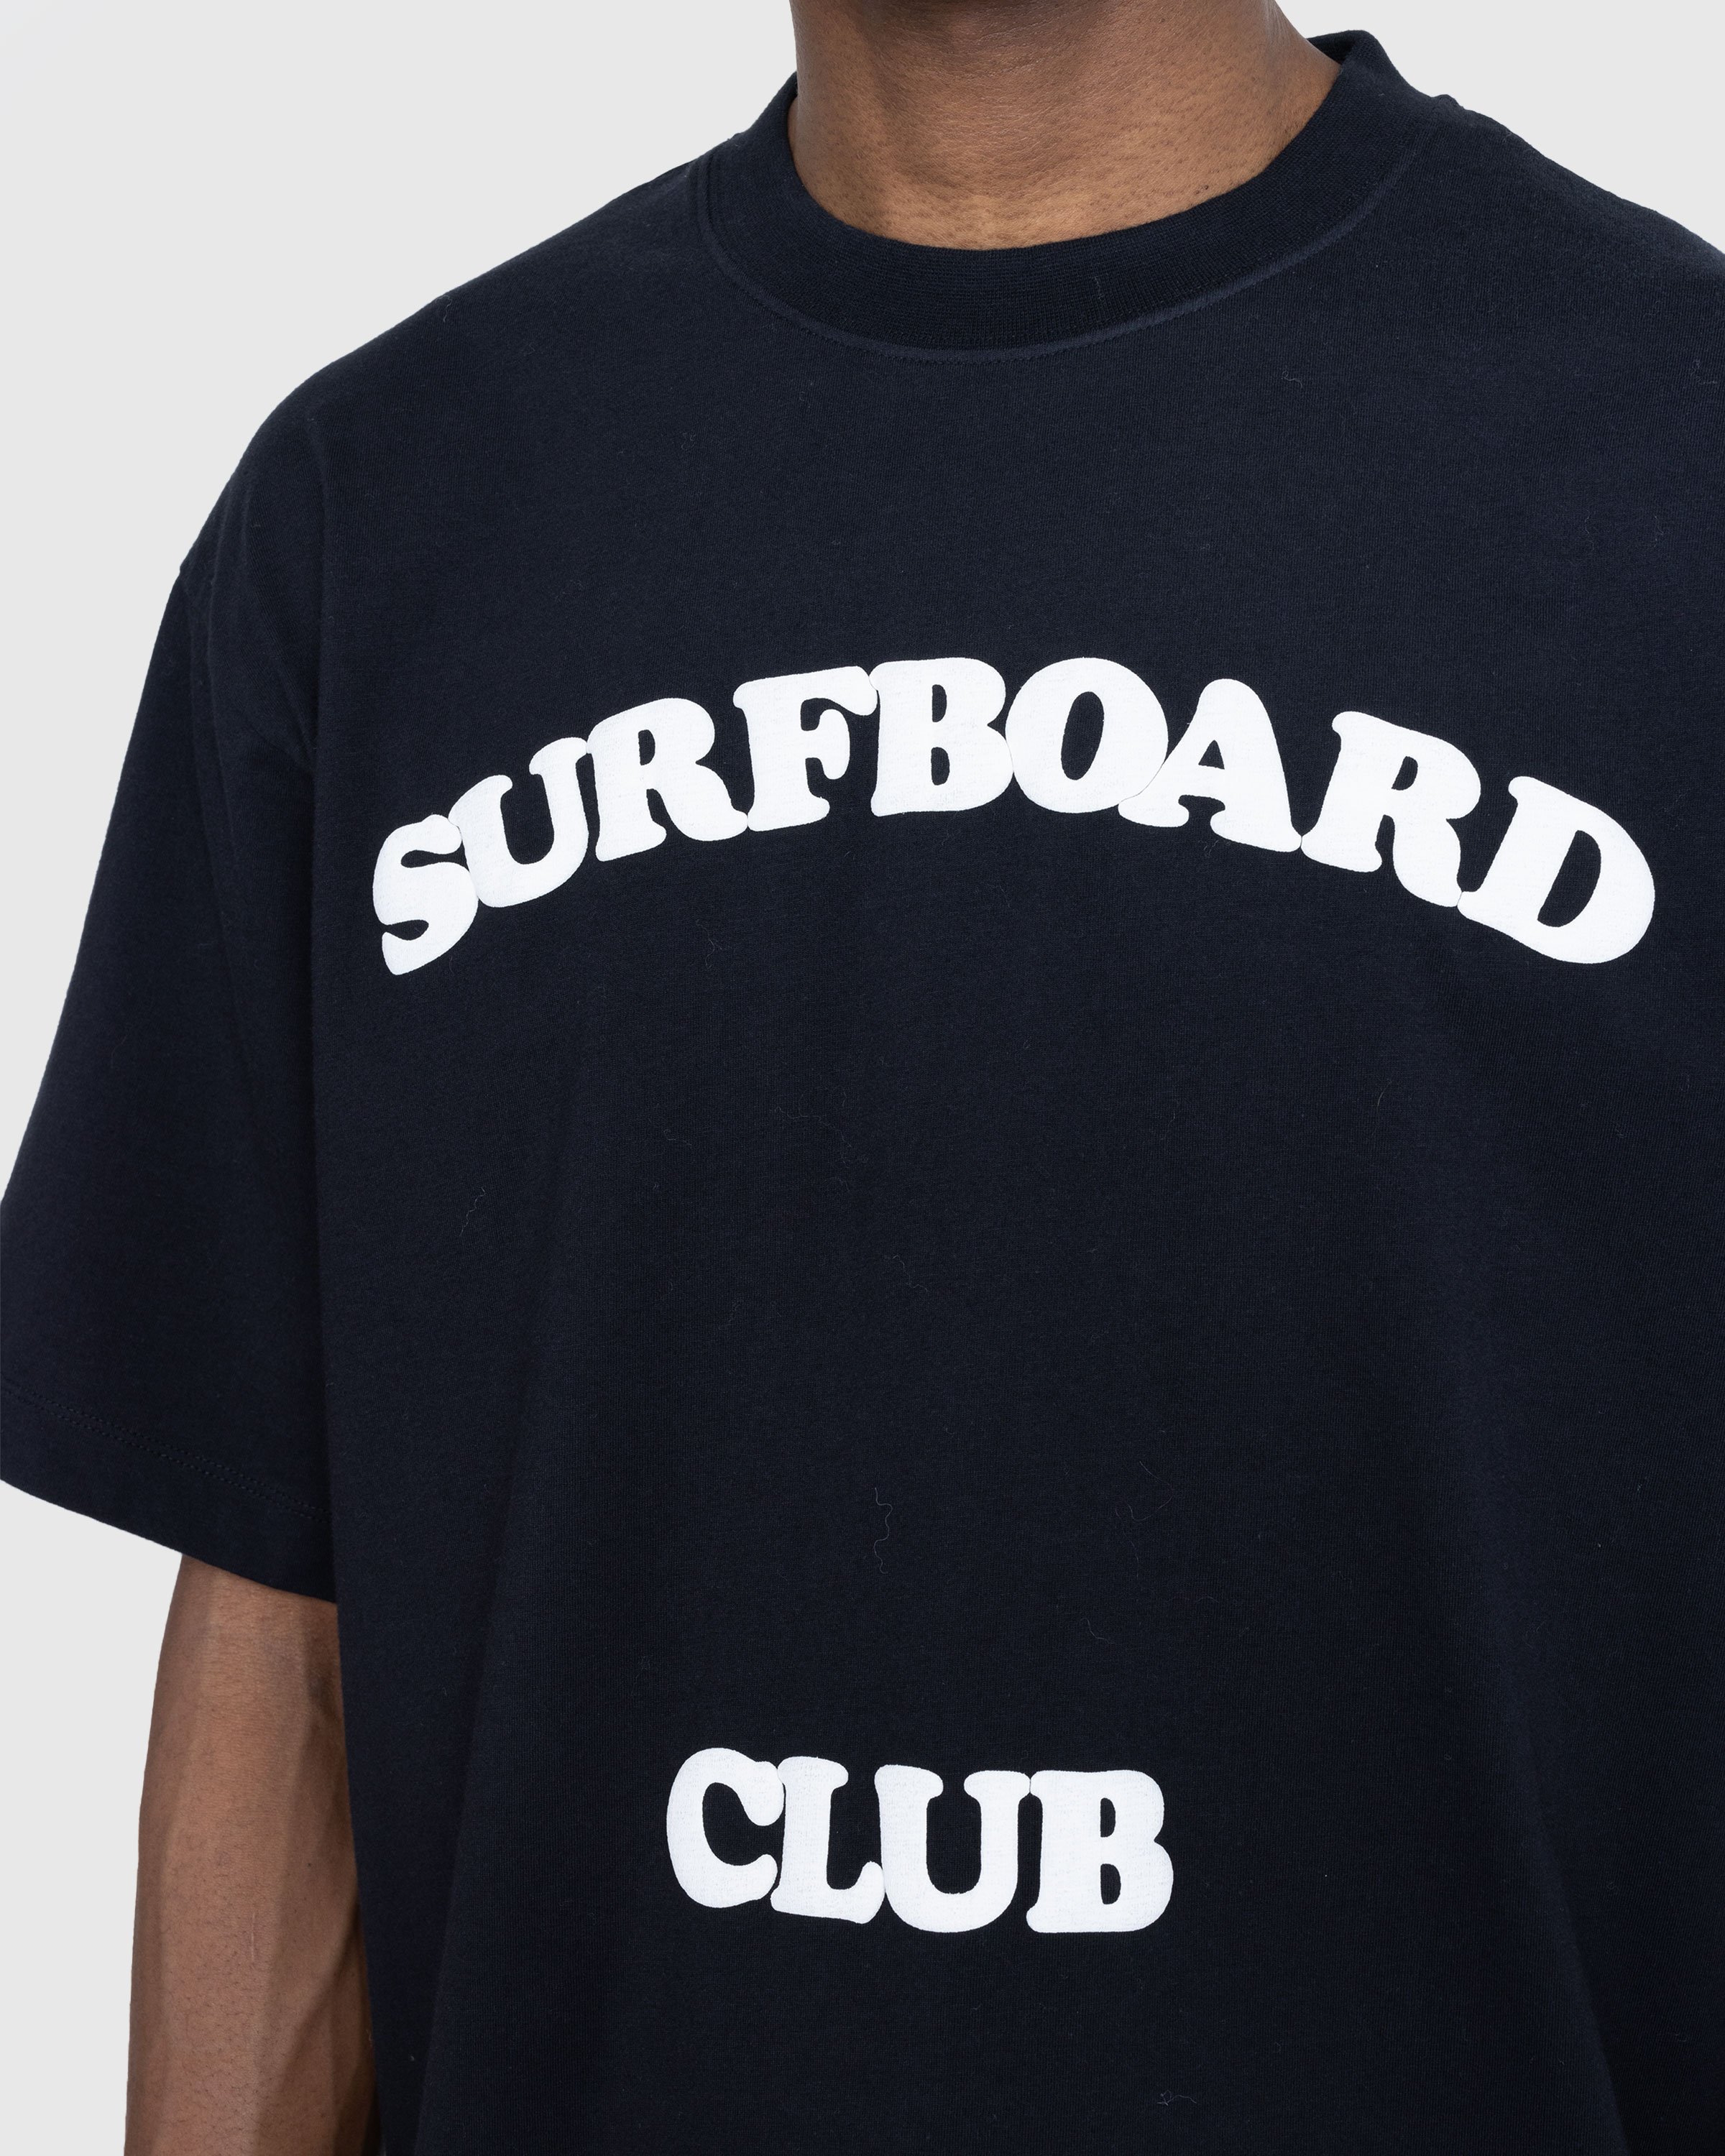 Stockholm Surfboard Club - Leaf Club Black Black - Clothing - Black - Image 5